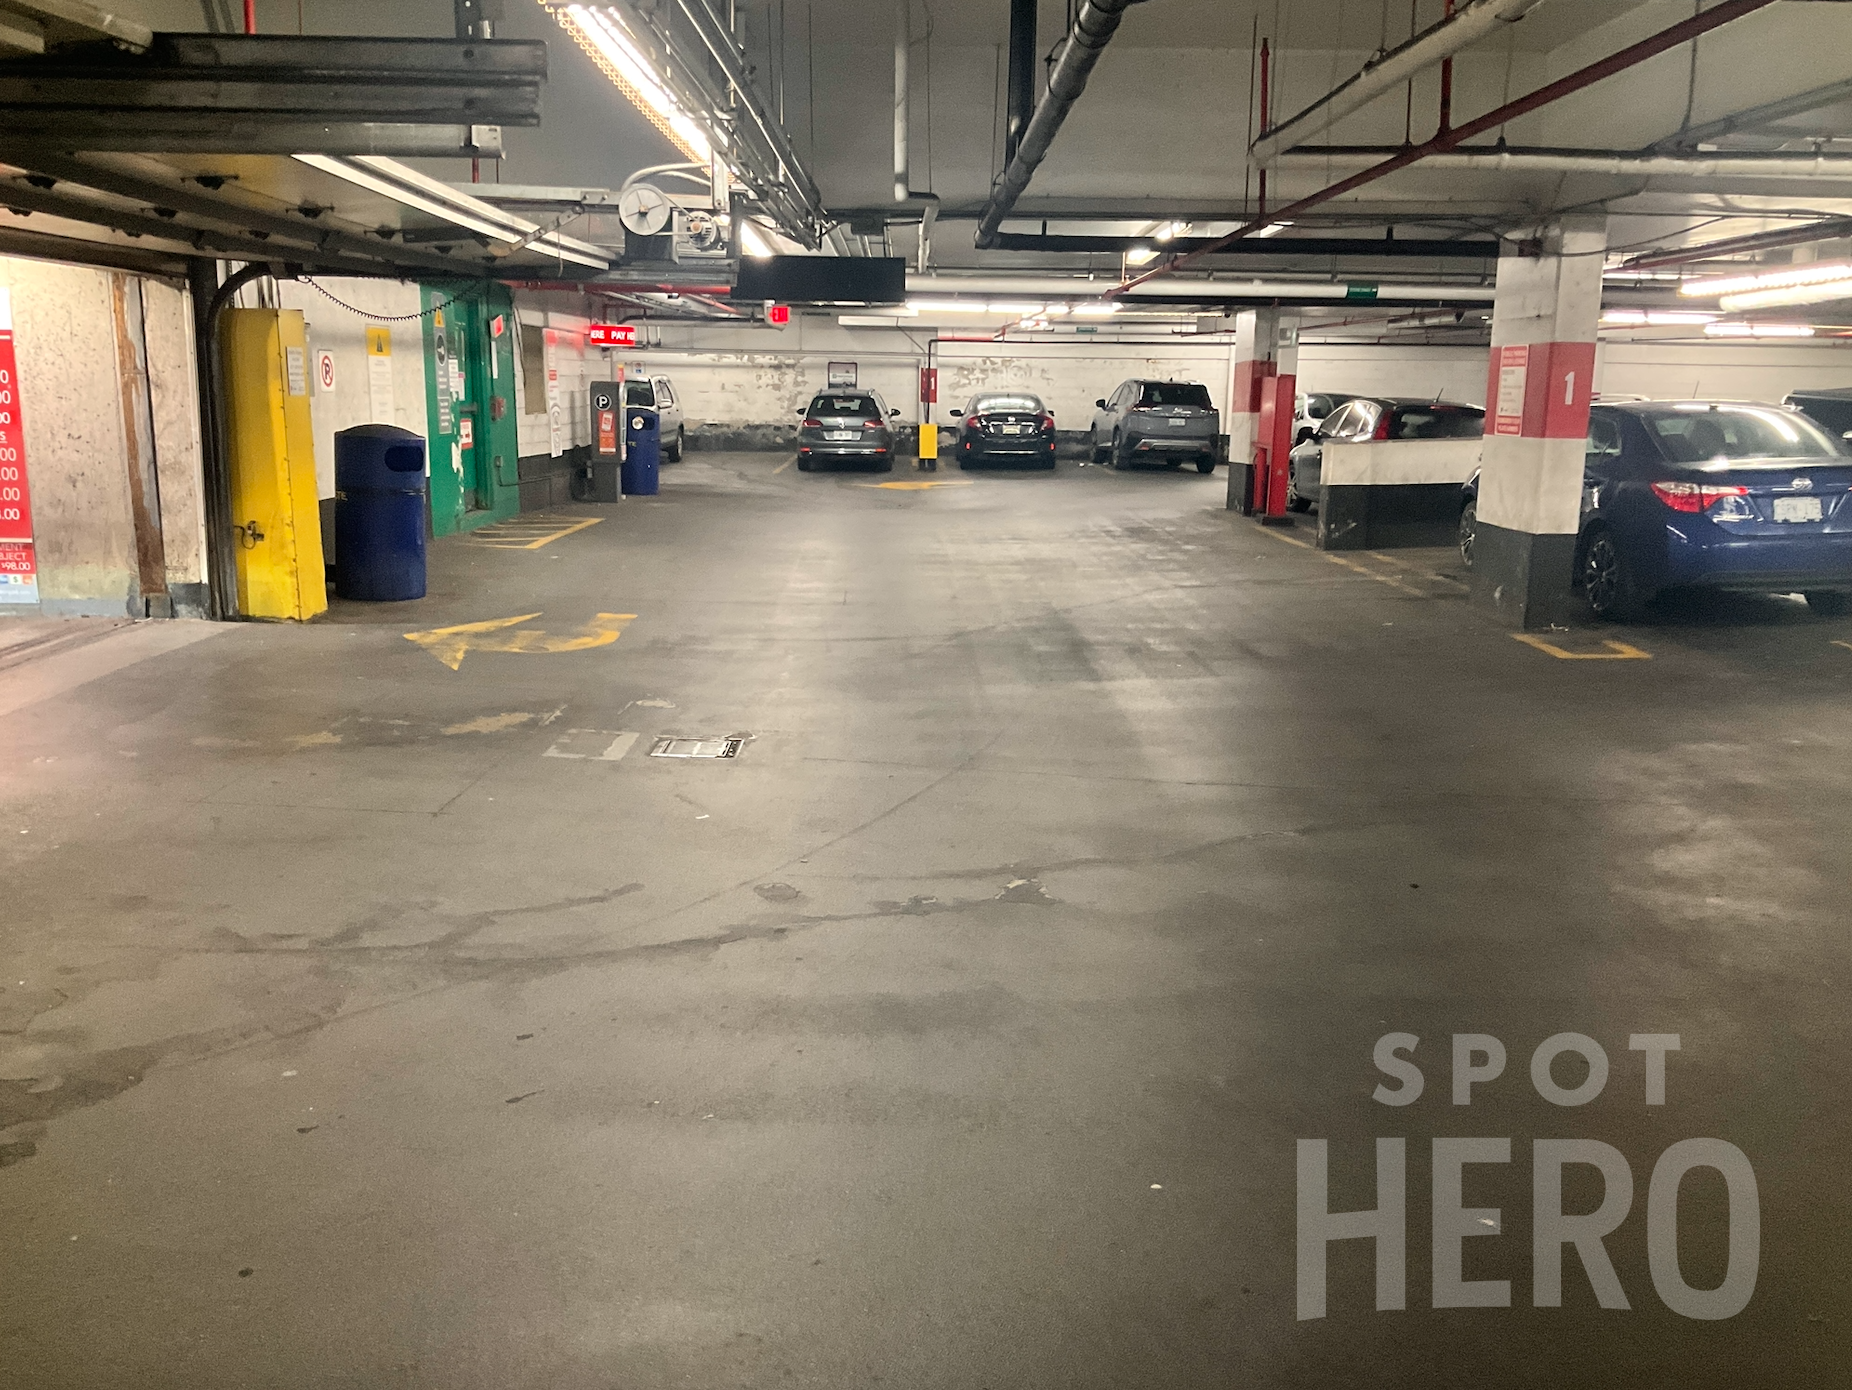 Rogers Centre Parking, Toronto Parking